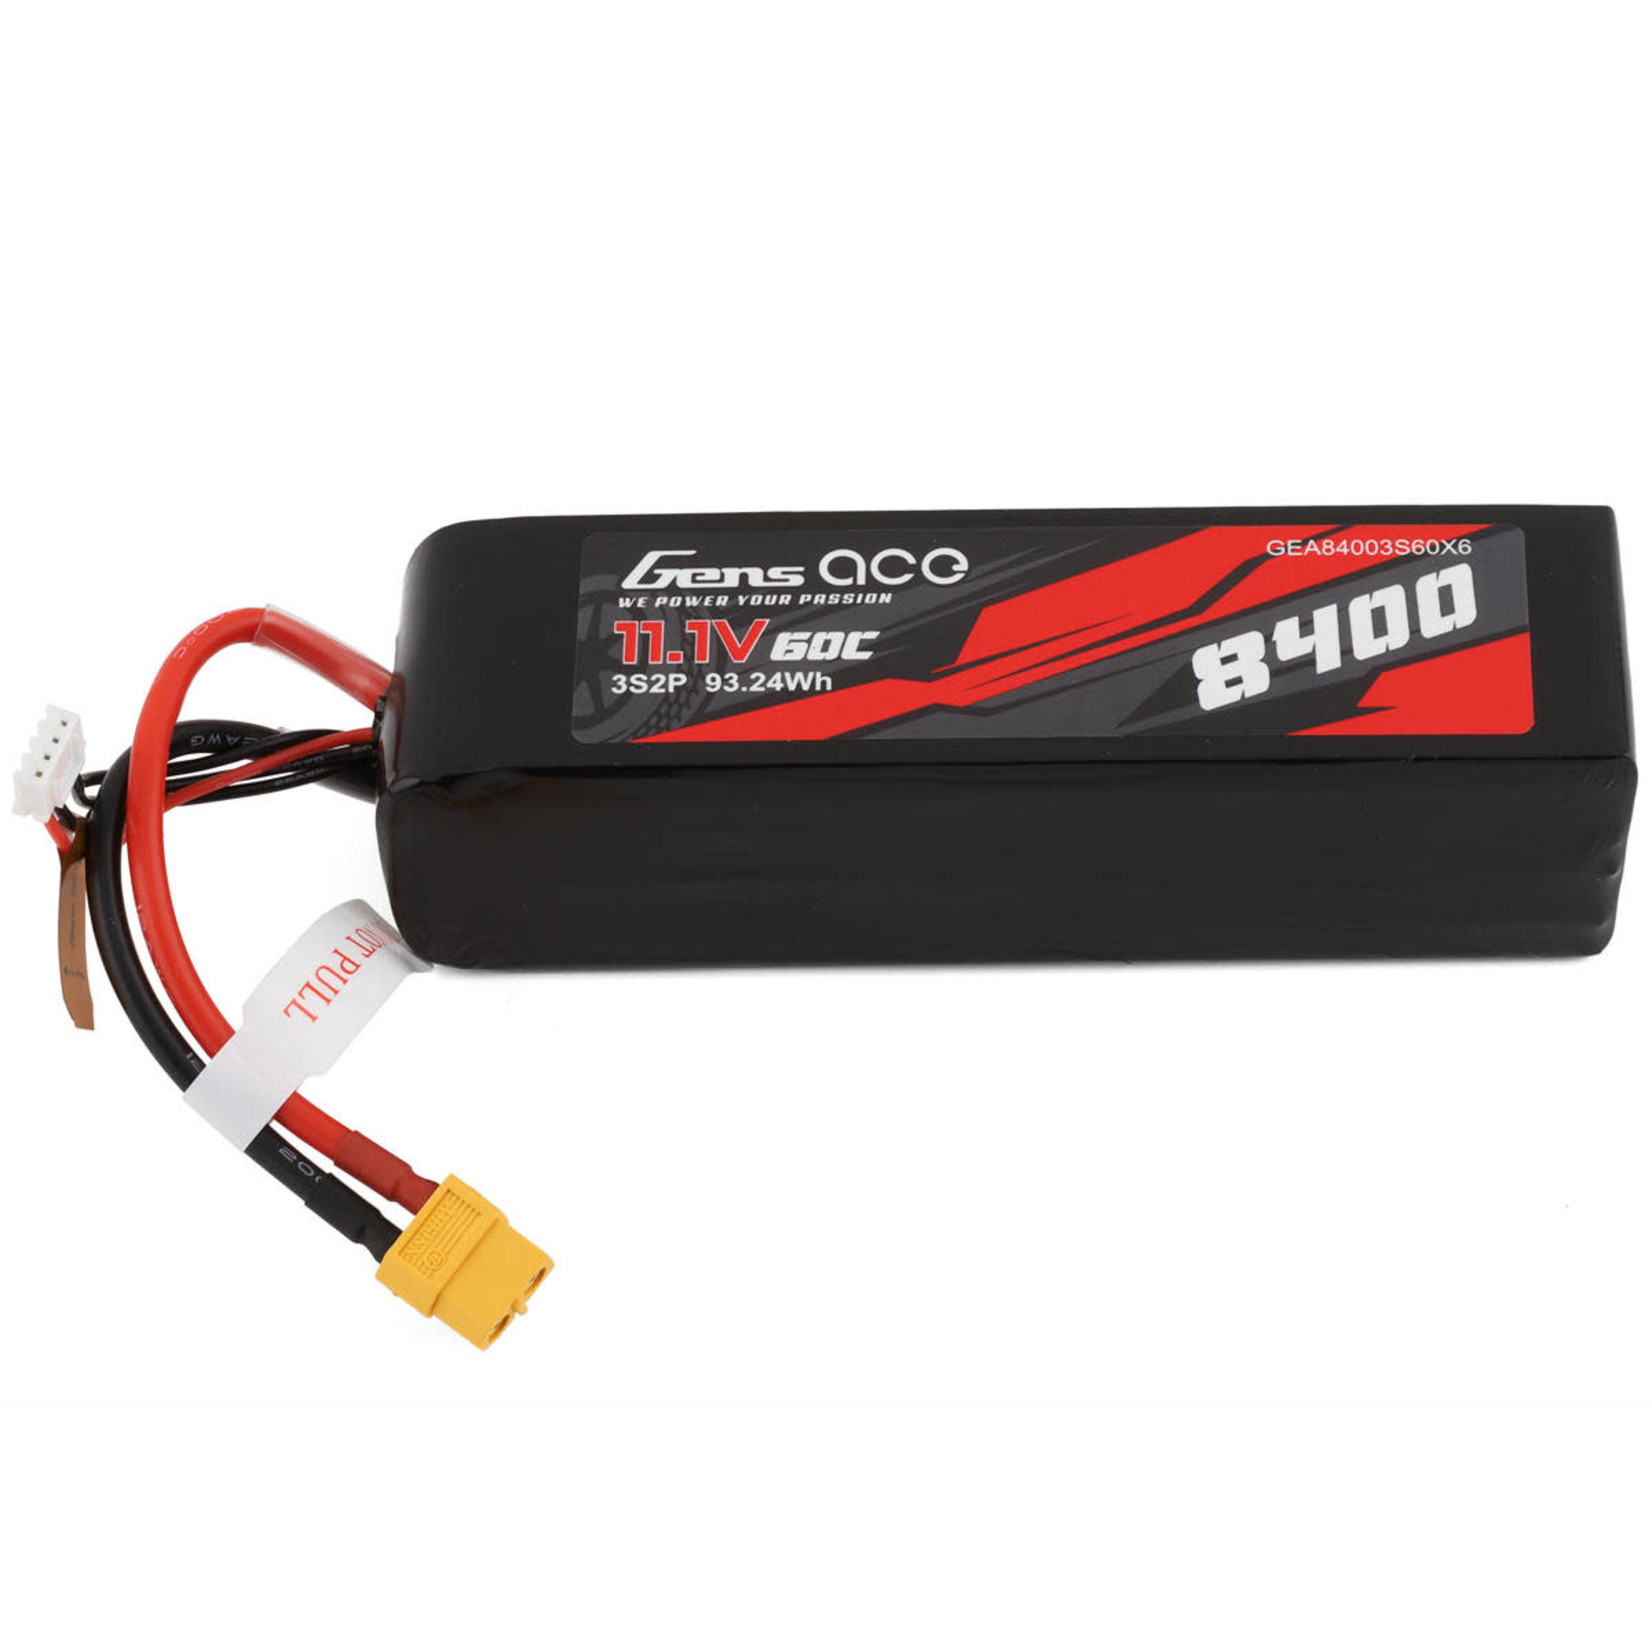 Gens Ace Gens Ace 3S LiPo Battery 60C (11.1V/8400mAh) w/XT-60 Connector #GEA84003S60X6